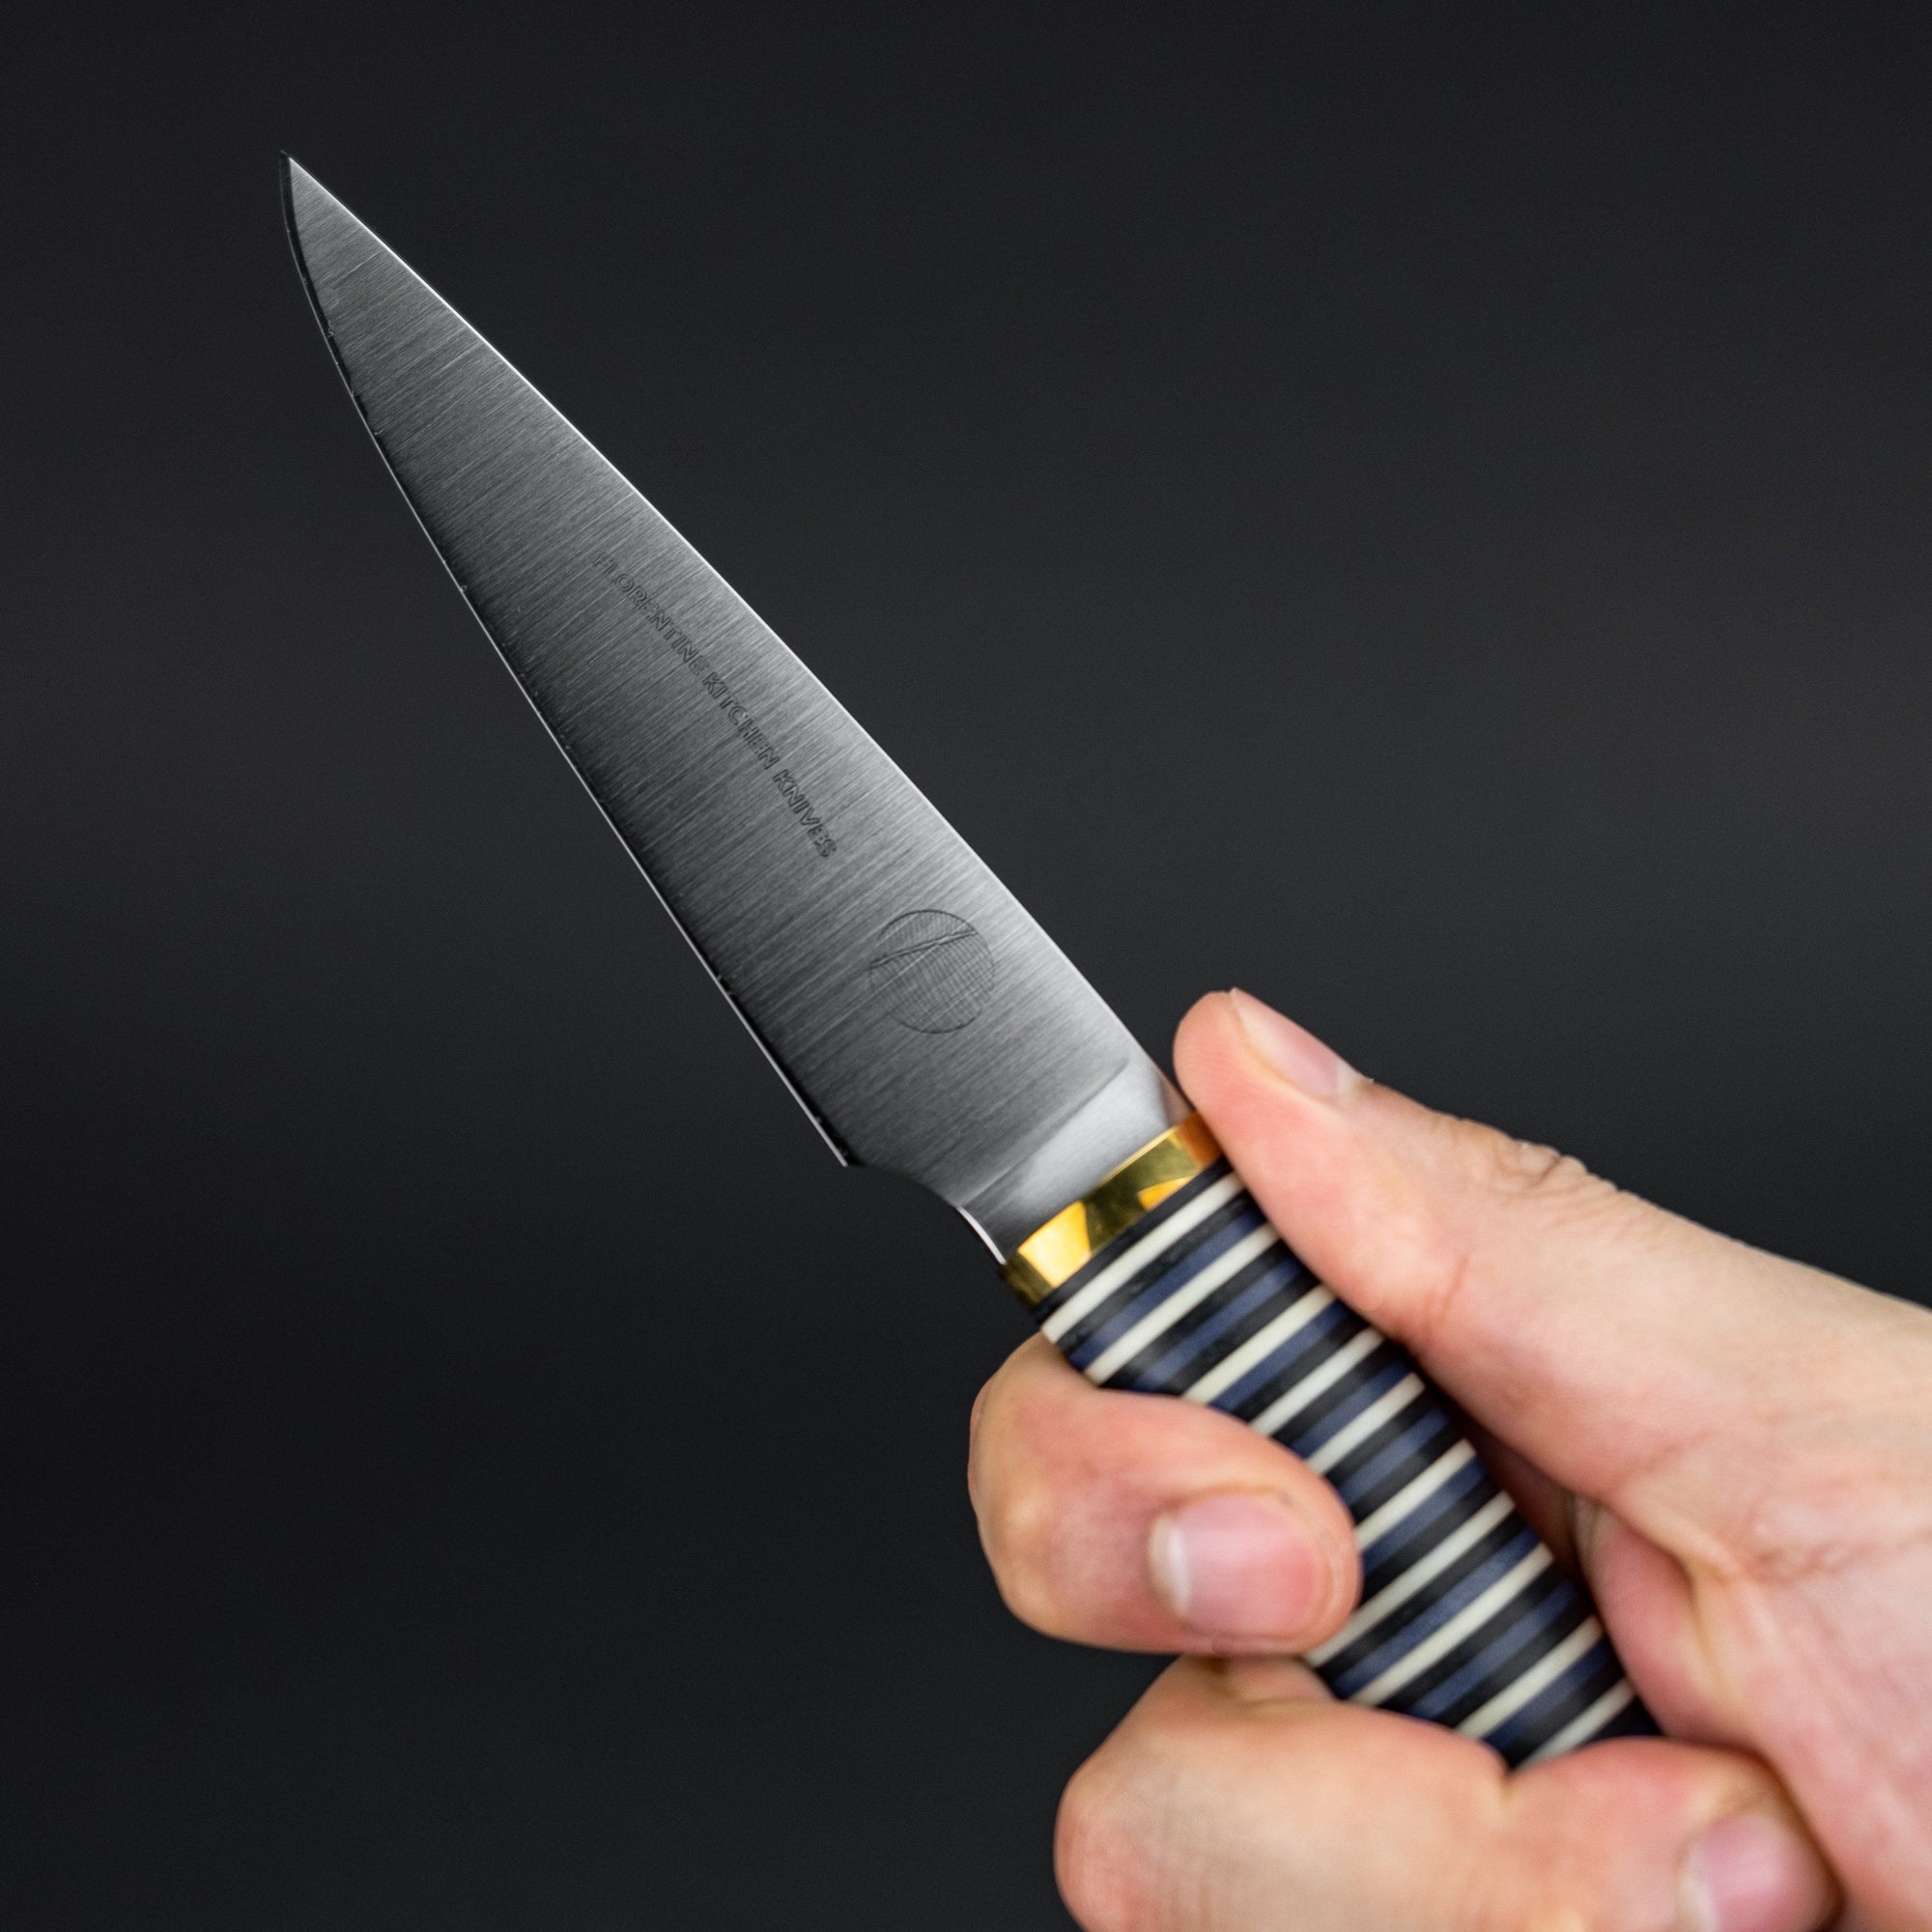 Yellow Kedma Paring Knife by Florentine Kitchen Knives